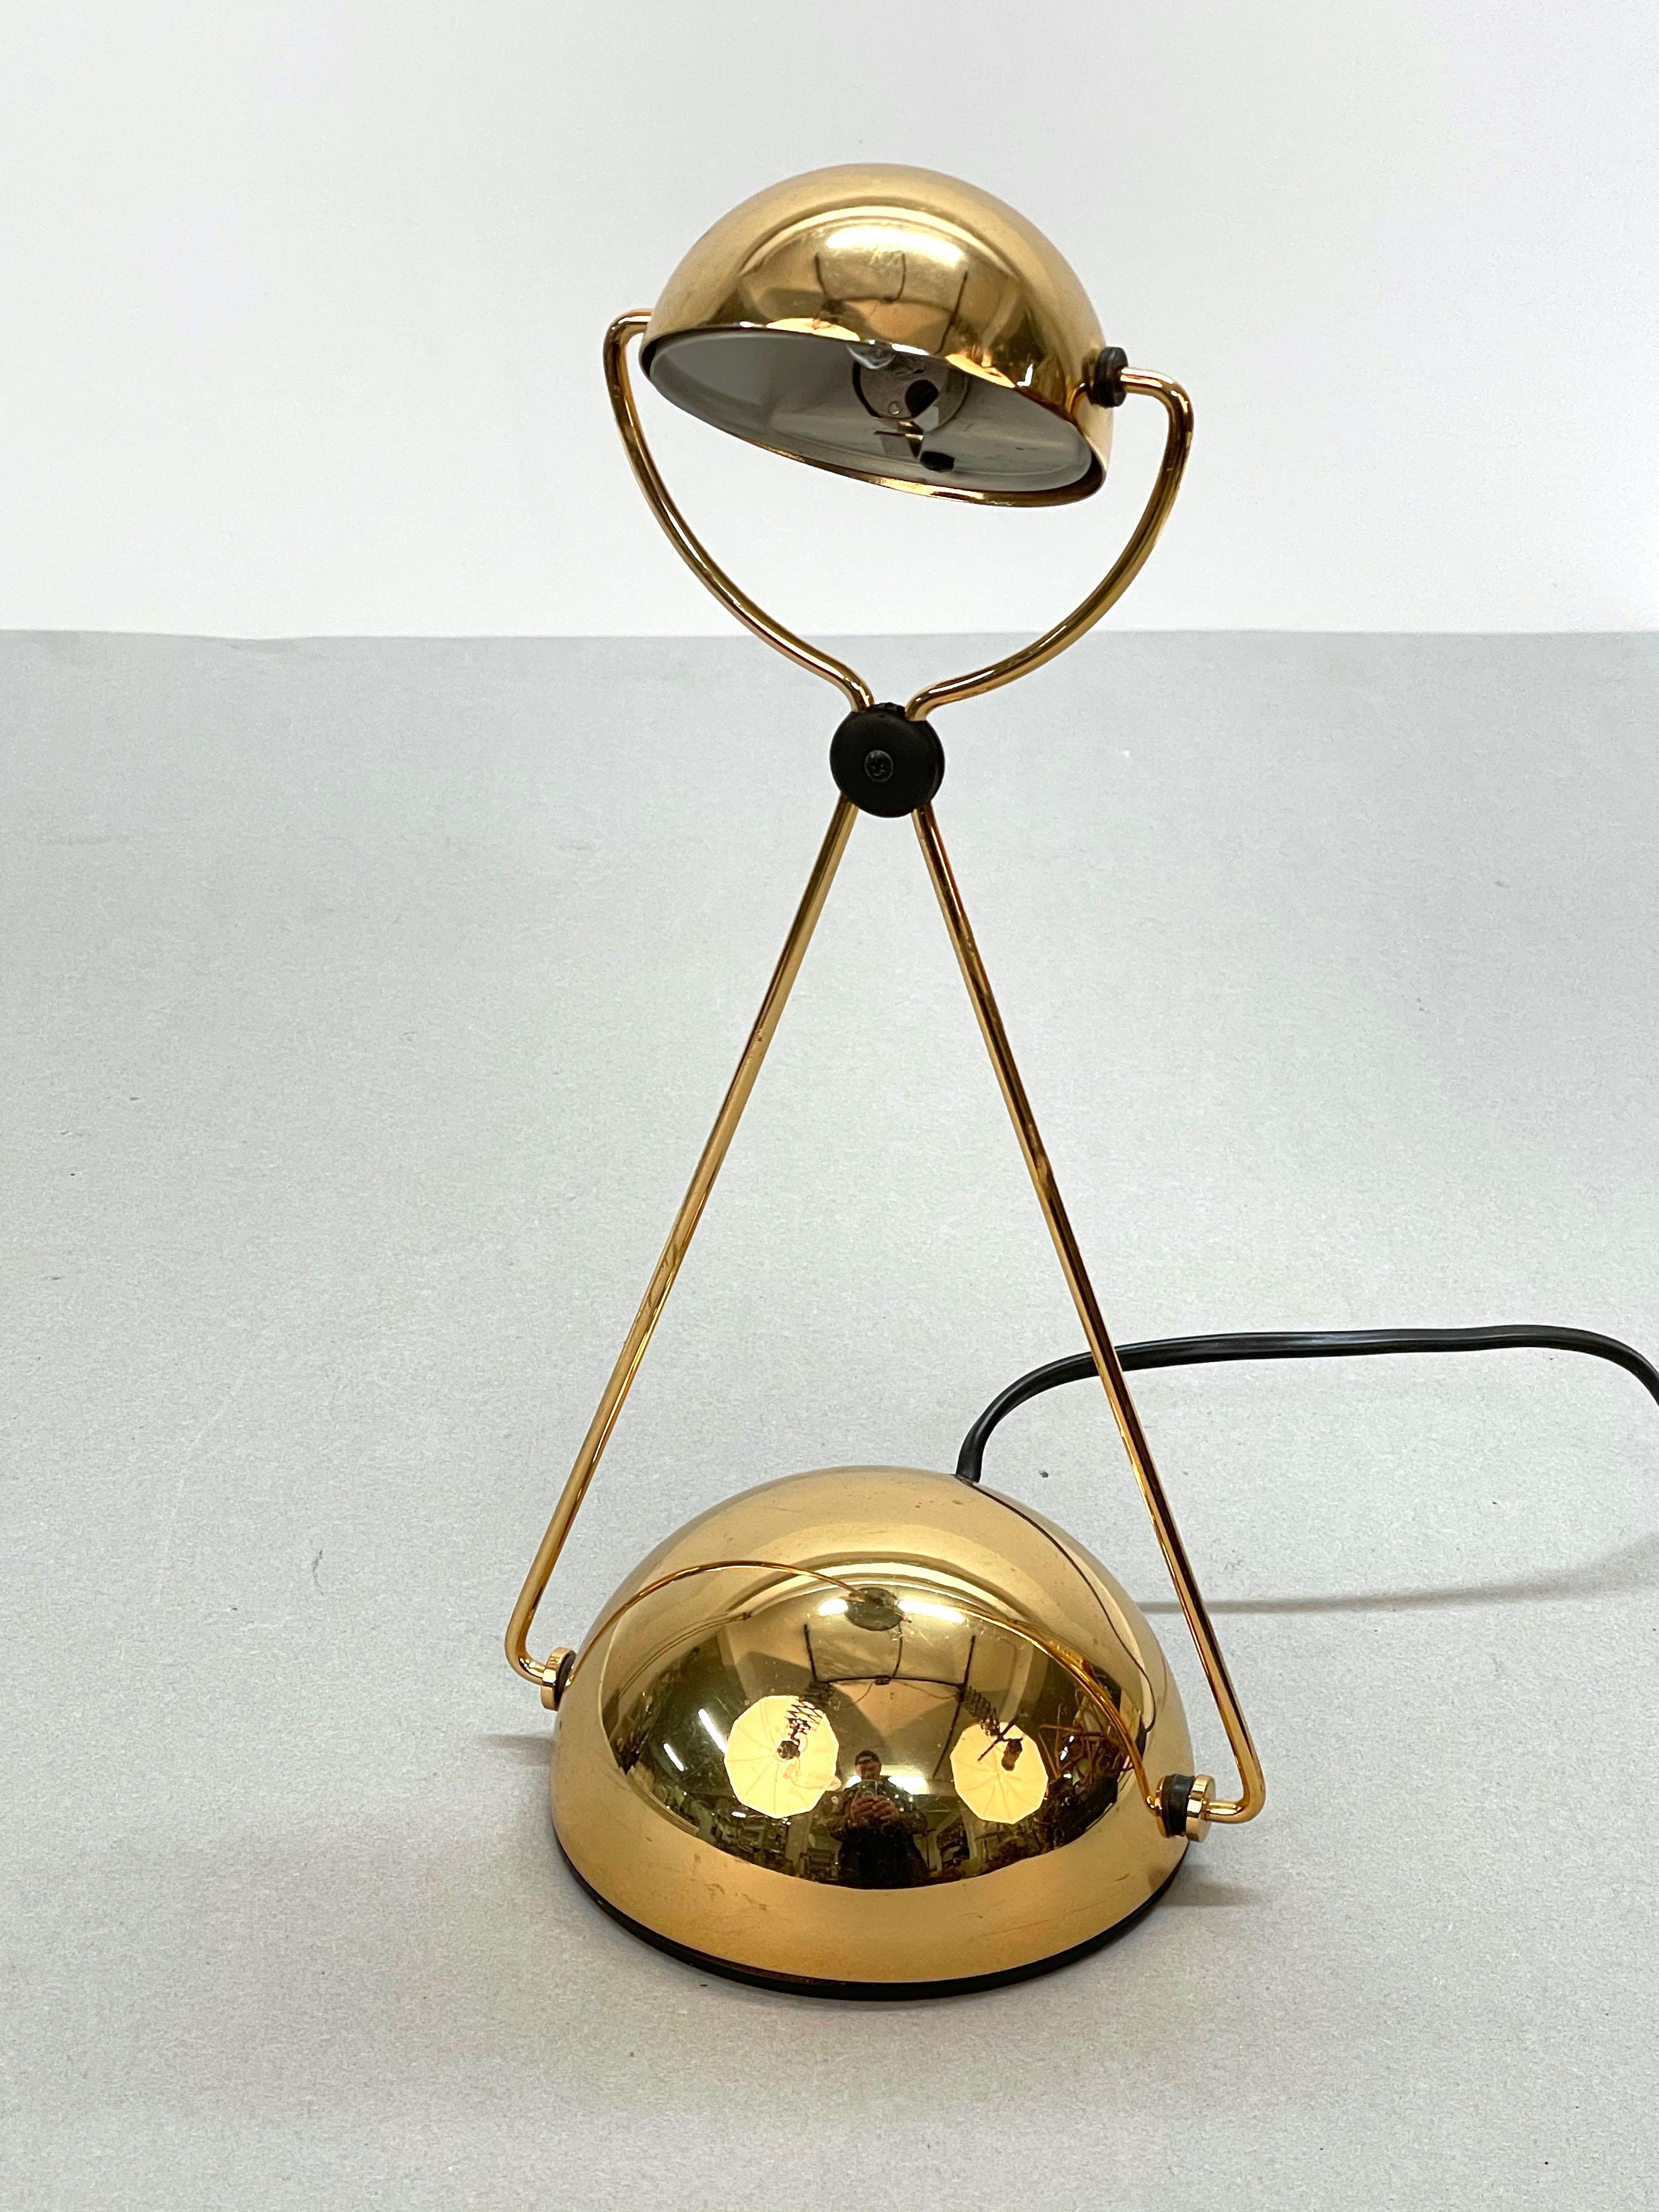 Stefano Cevoli Midcentury Gold-Plated Metal Italian Table Lamp 'Meridiana' 1980s For Sale 8